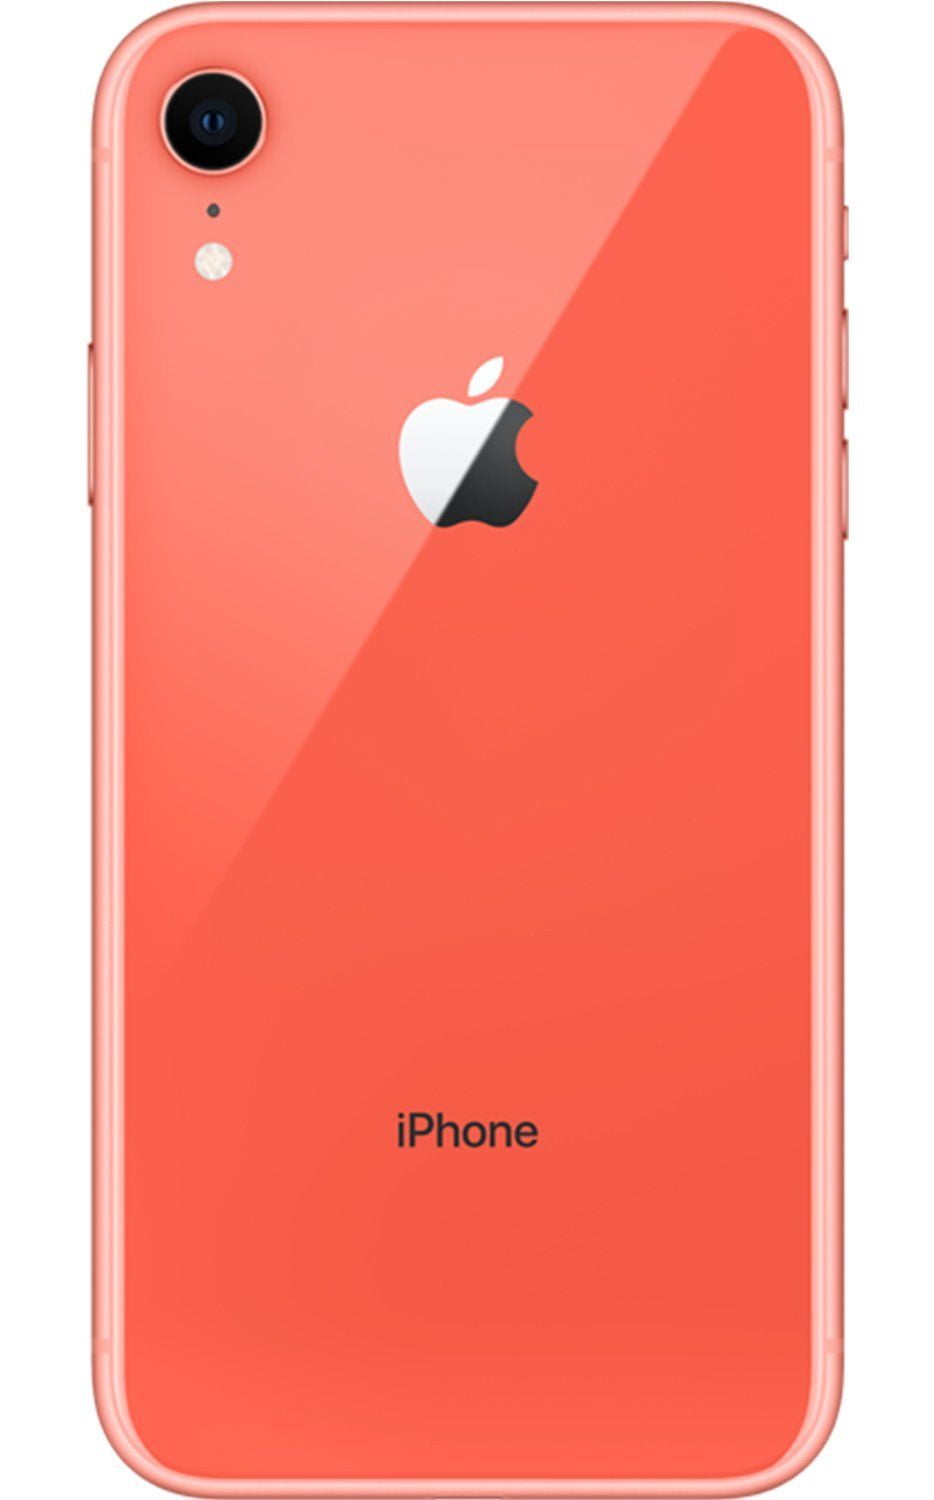 Refurbished Like New  Apple iPhone XR 64GB Factory Unlocked Smartphone 4G LTE iOS Smartphone